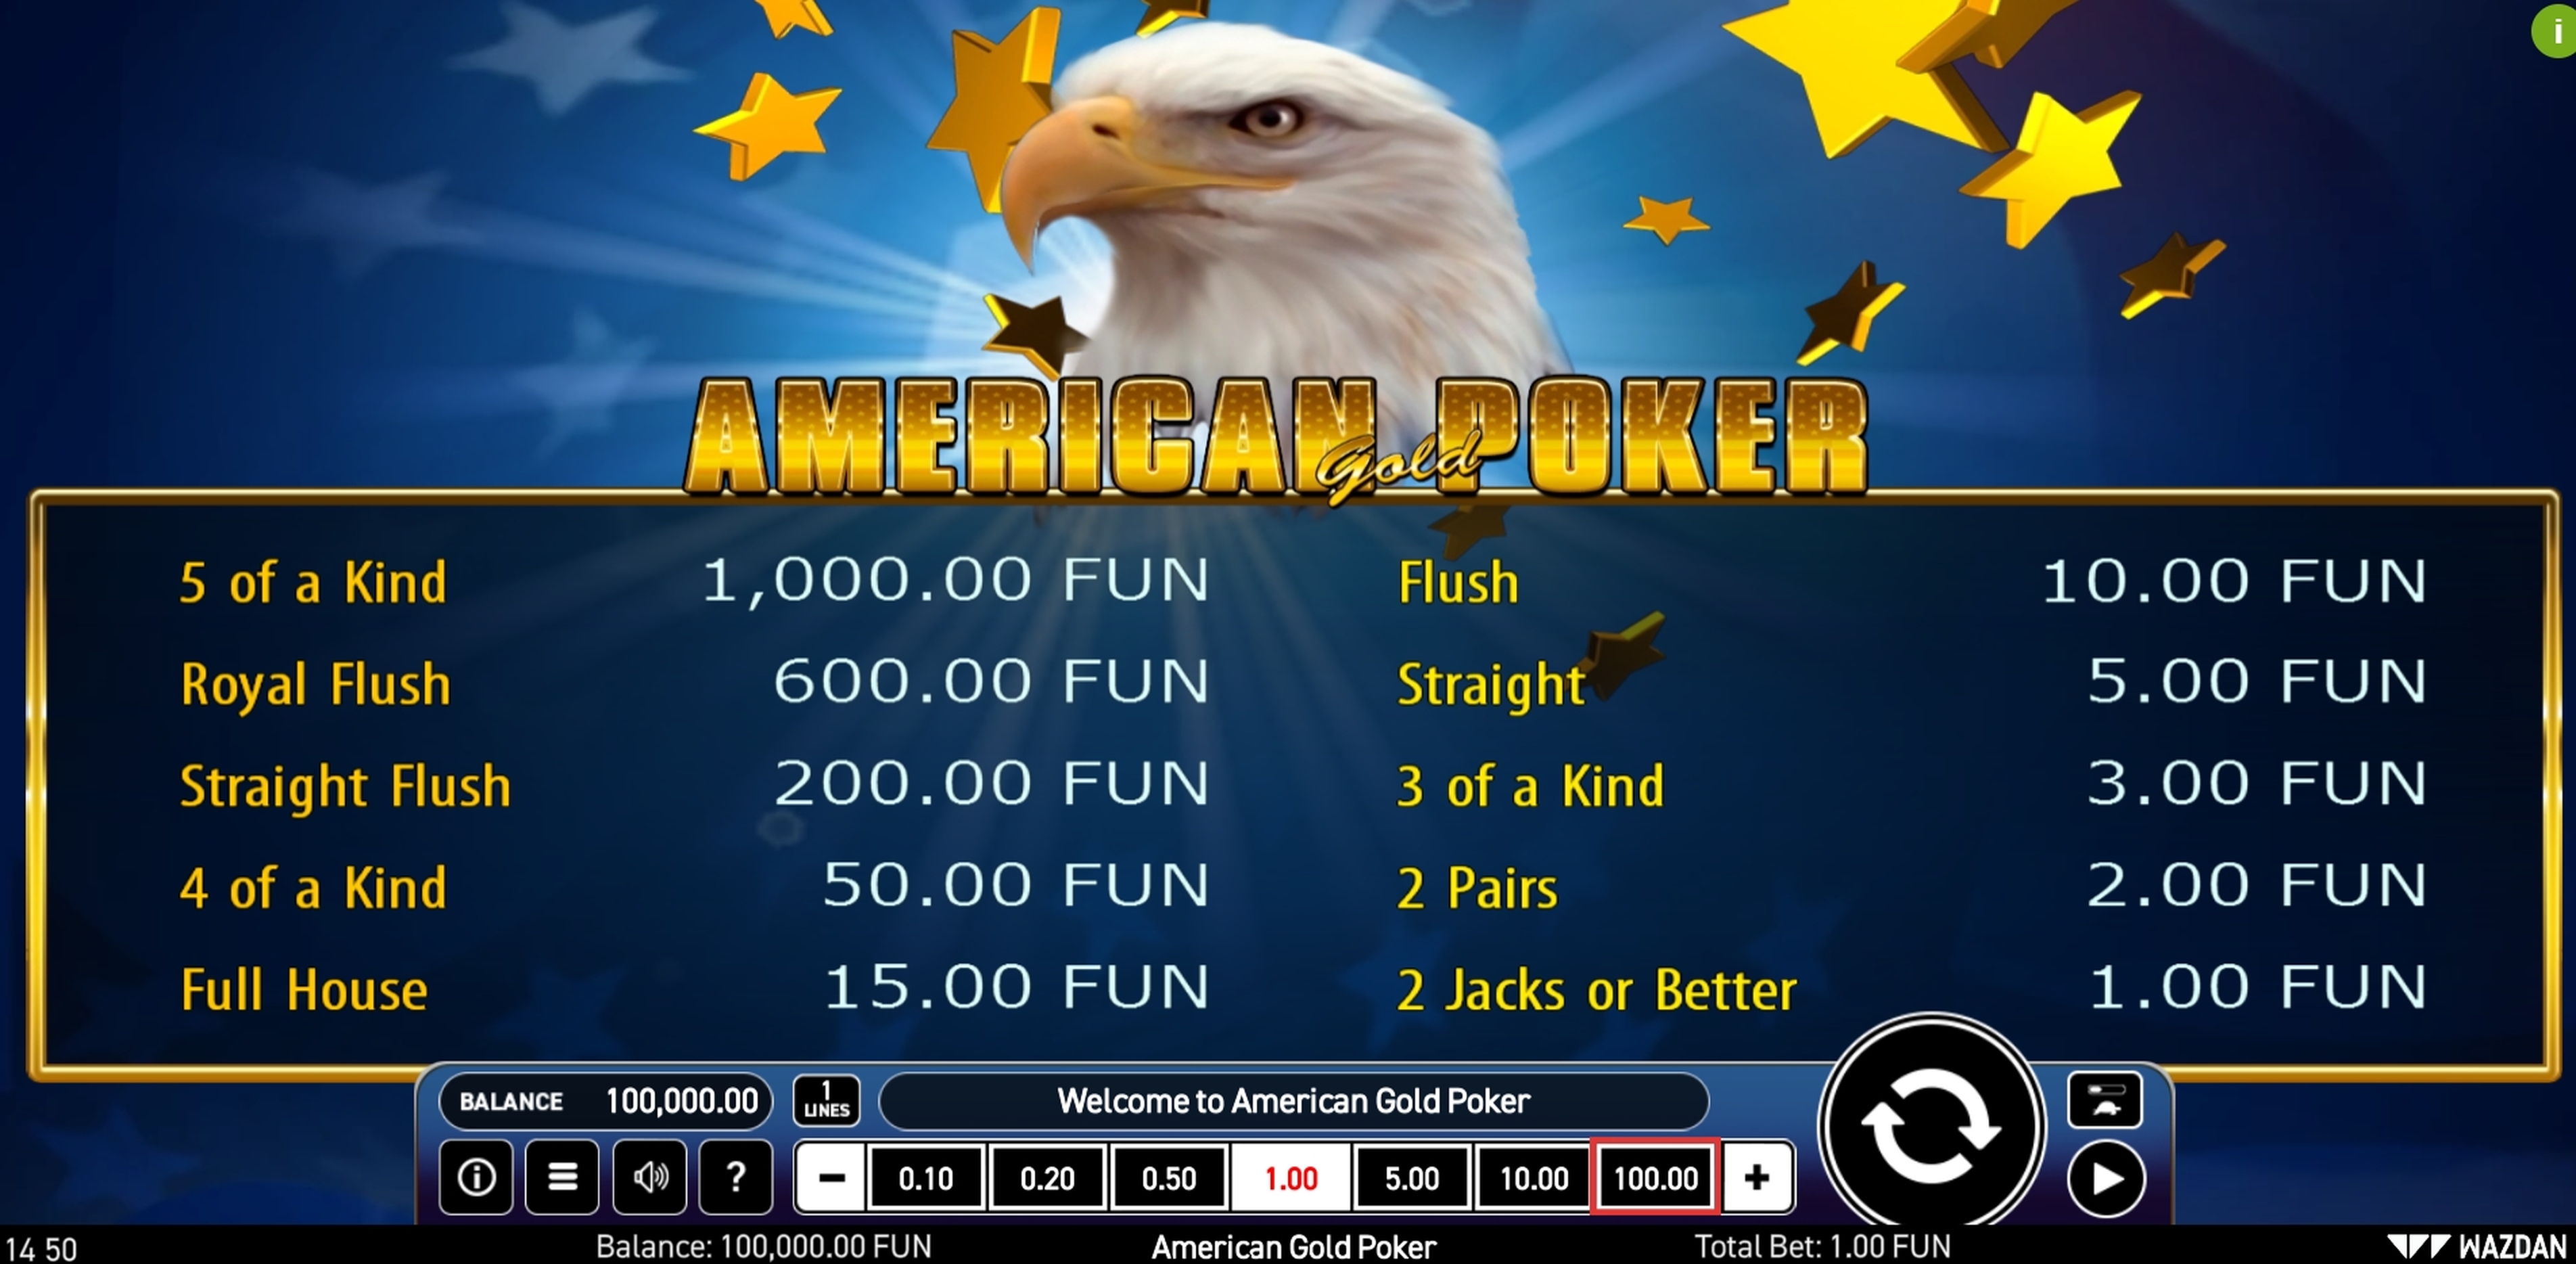 Info of American Gold Poker Slot Game by Wazdan